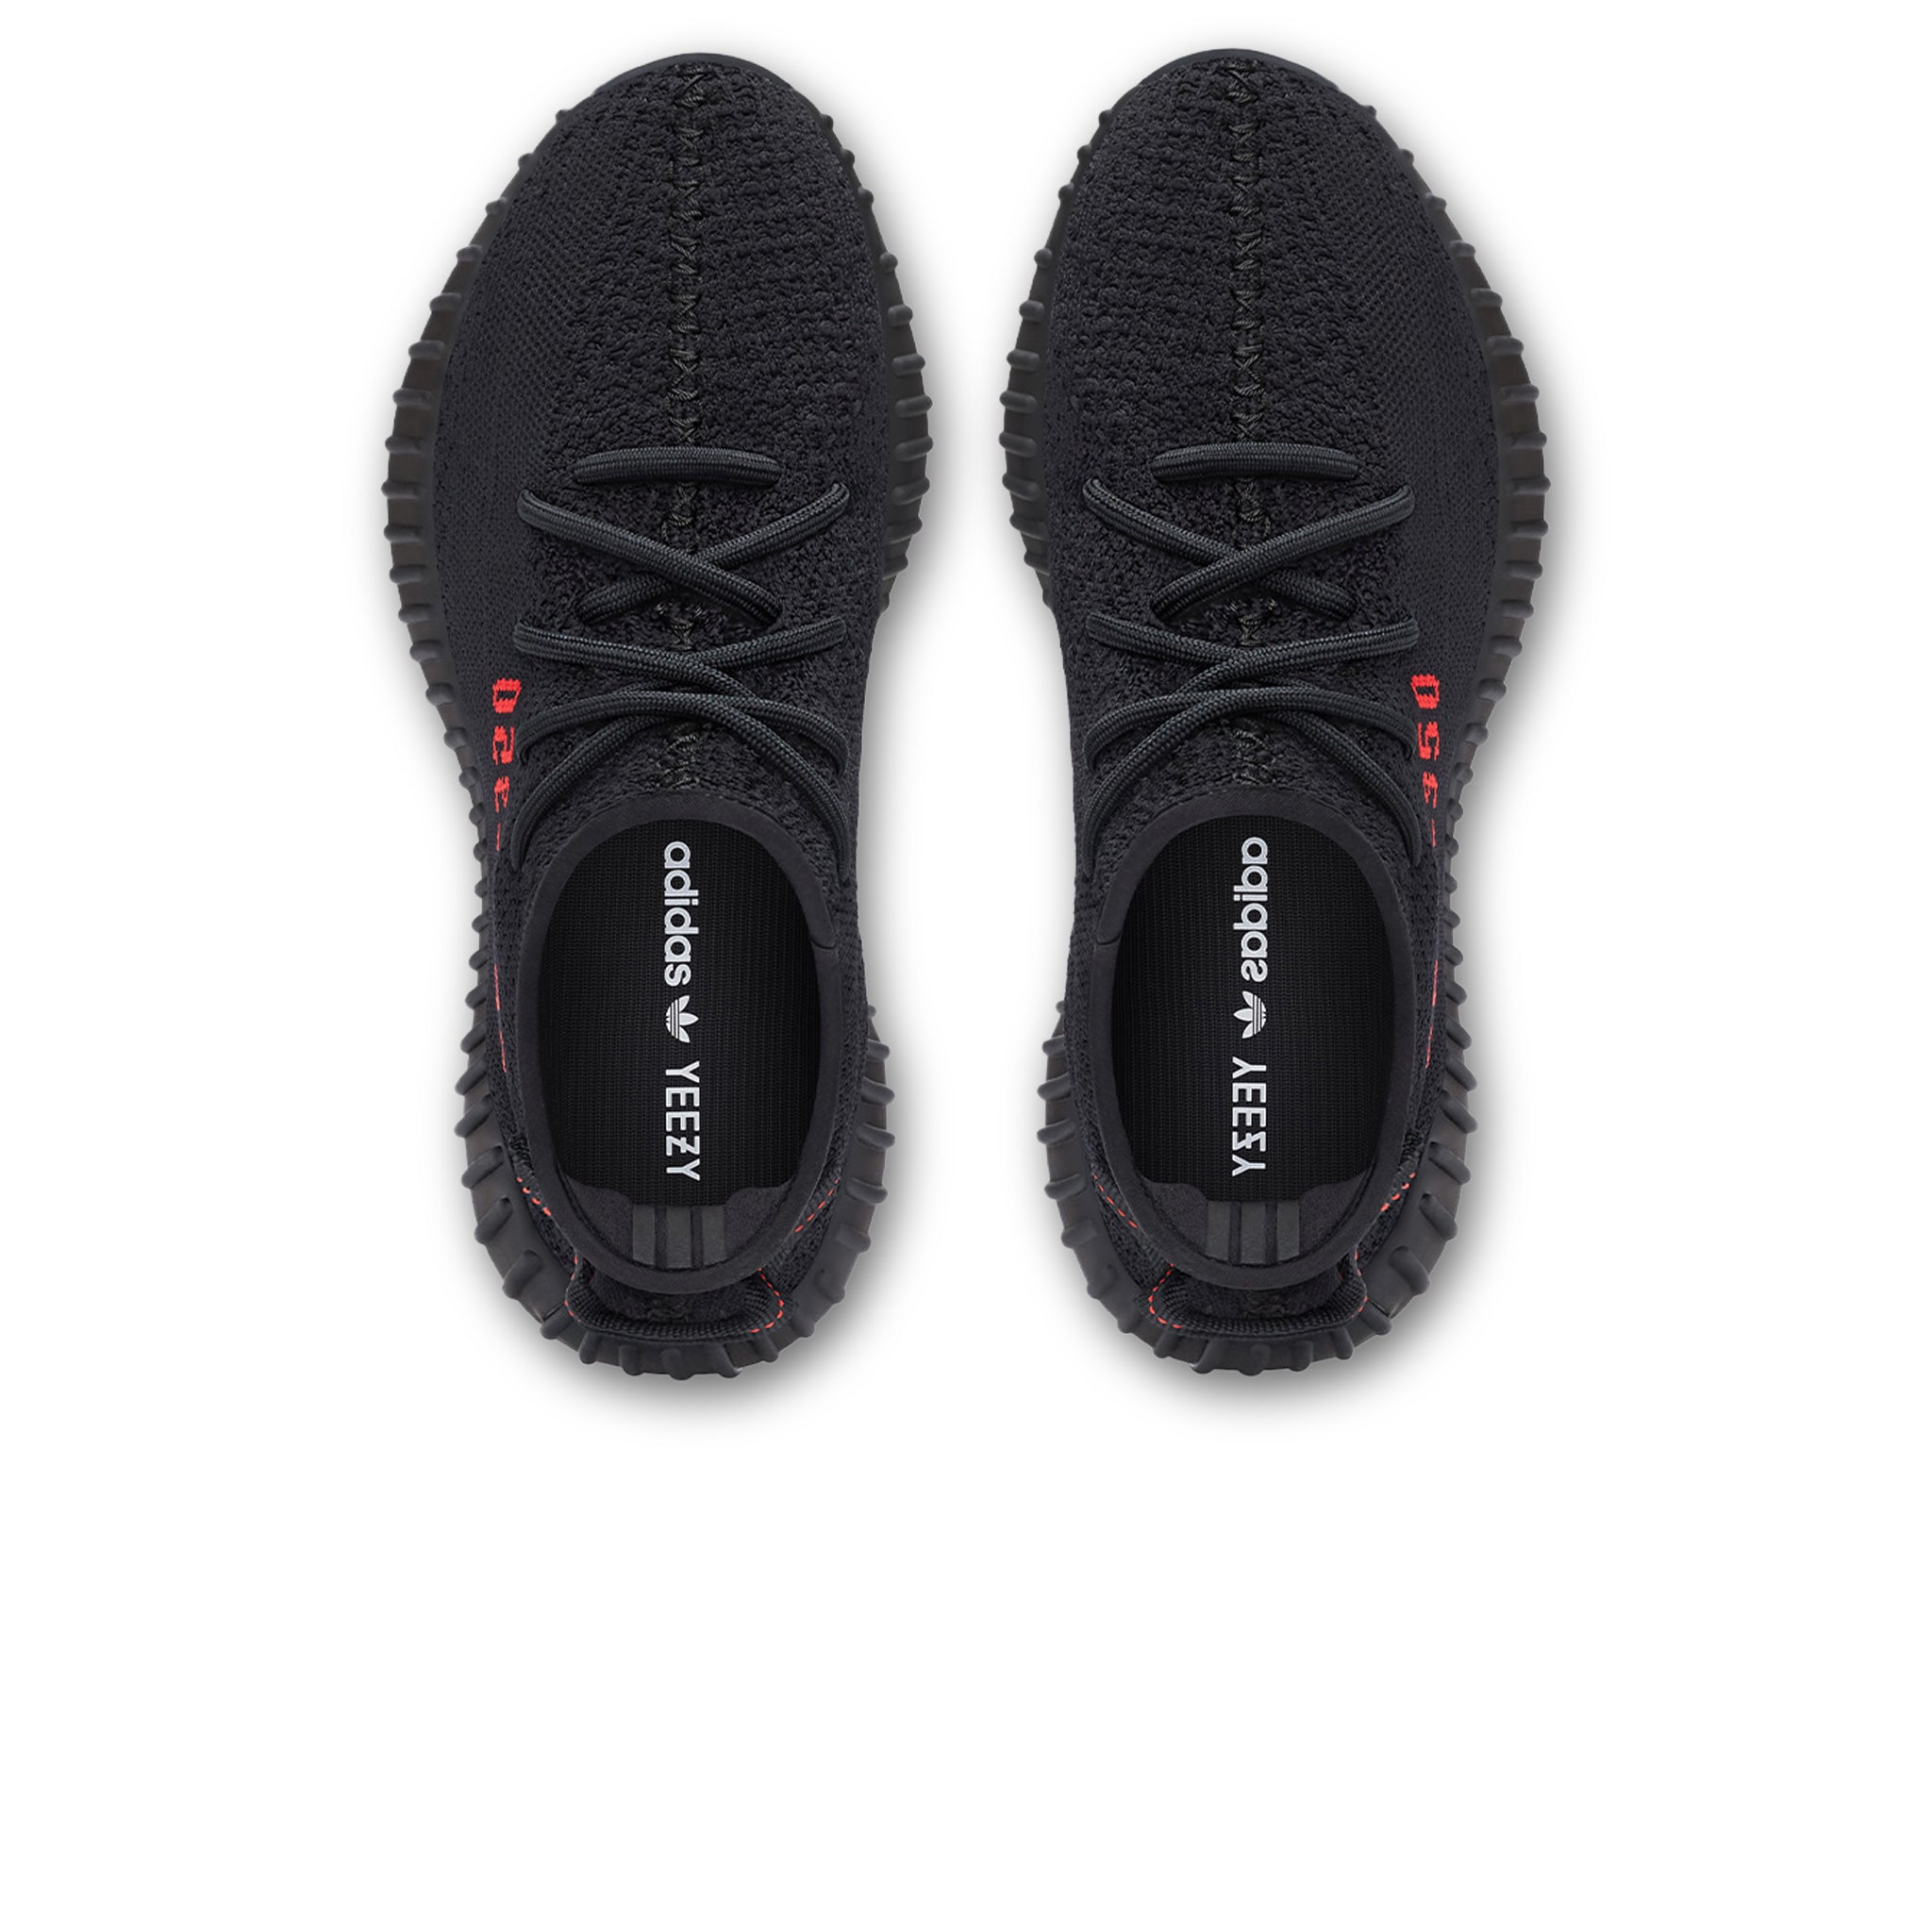 samvittighed område kylling Adidas Yeezy Boost 350 V2 Bred Core Black Red – Crepslocker